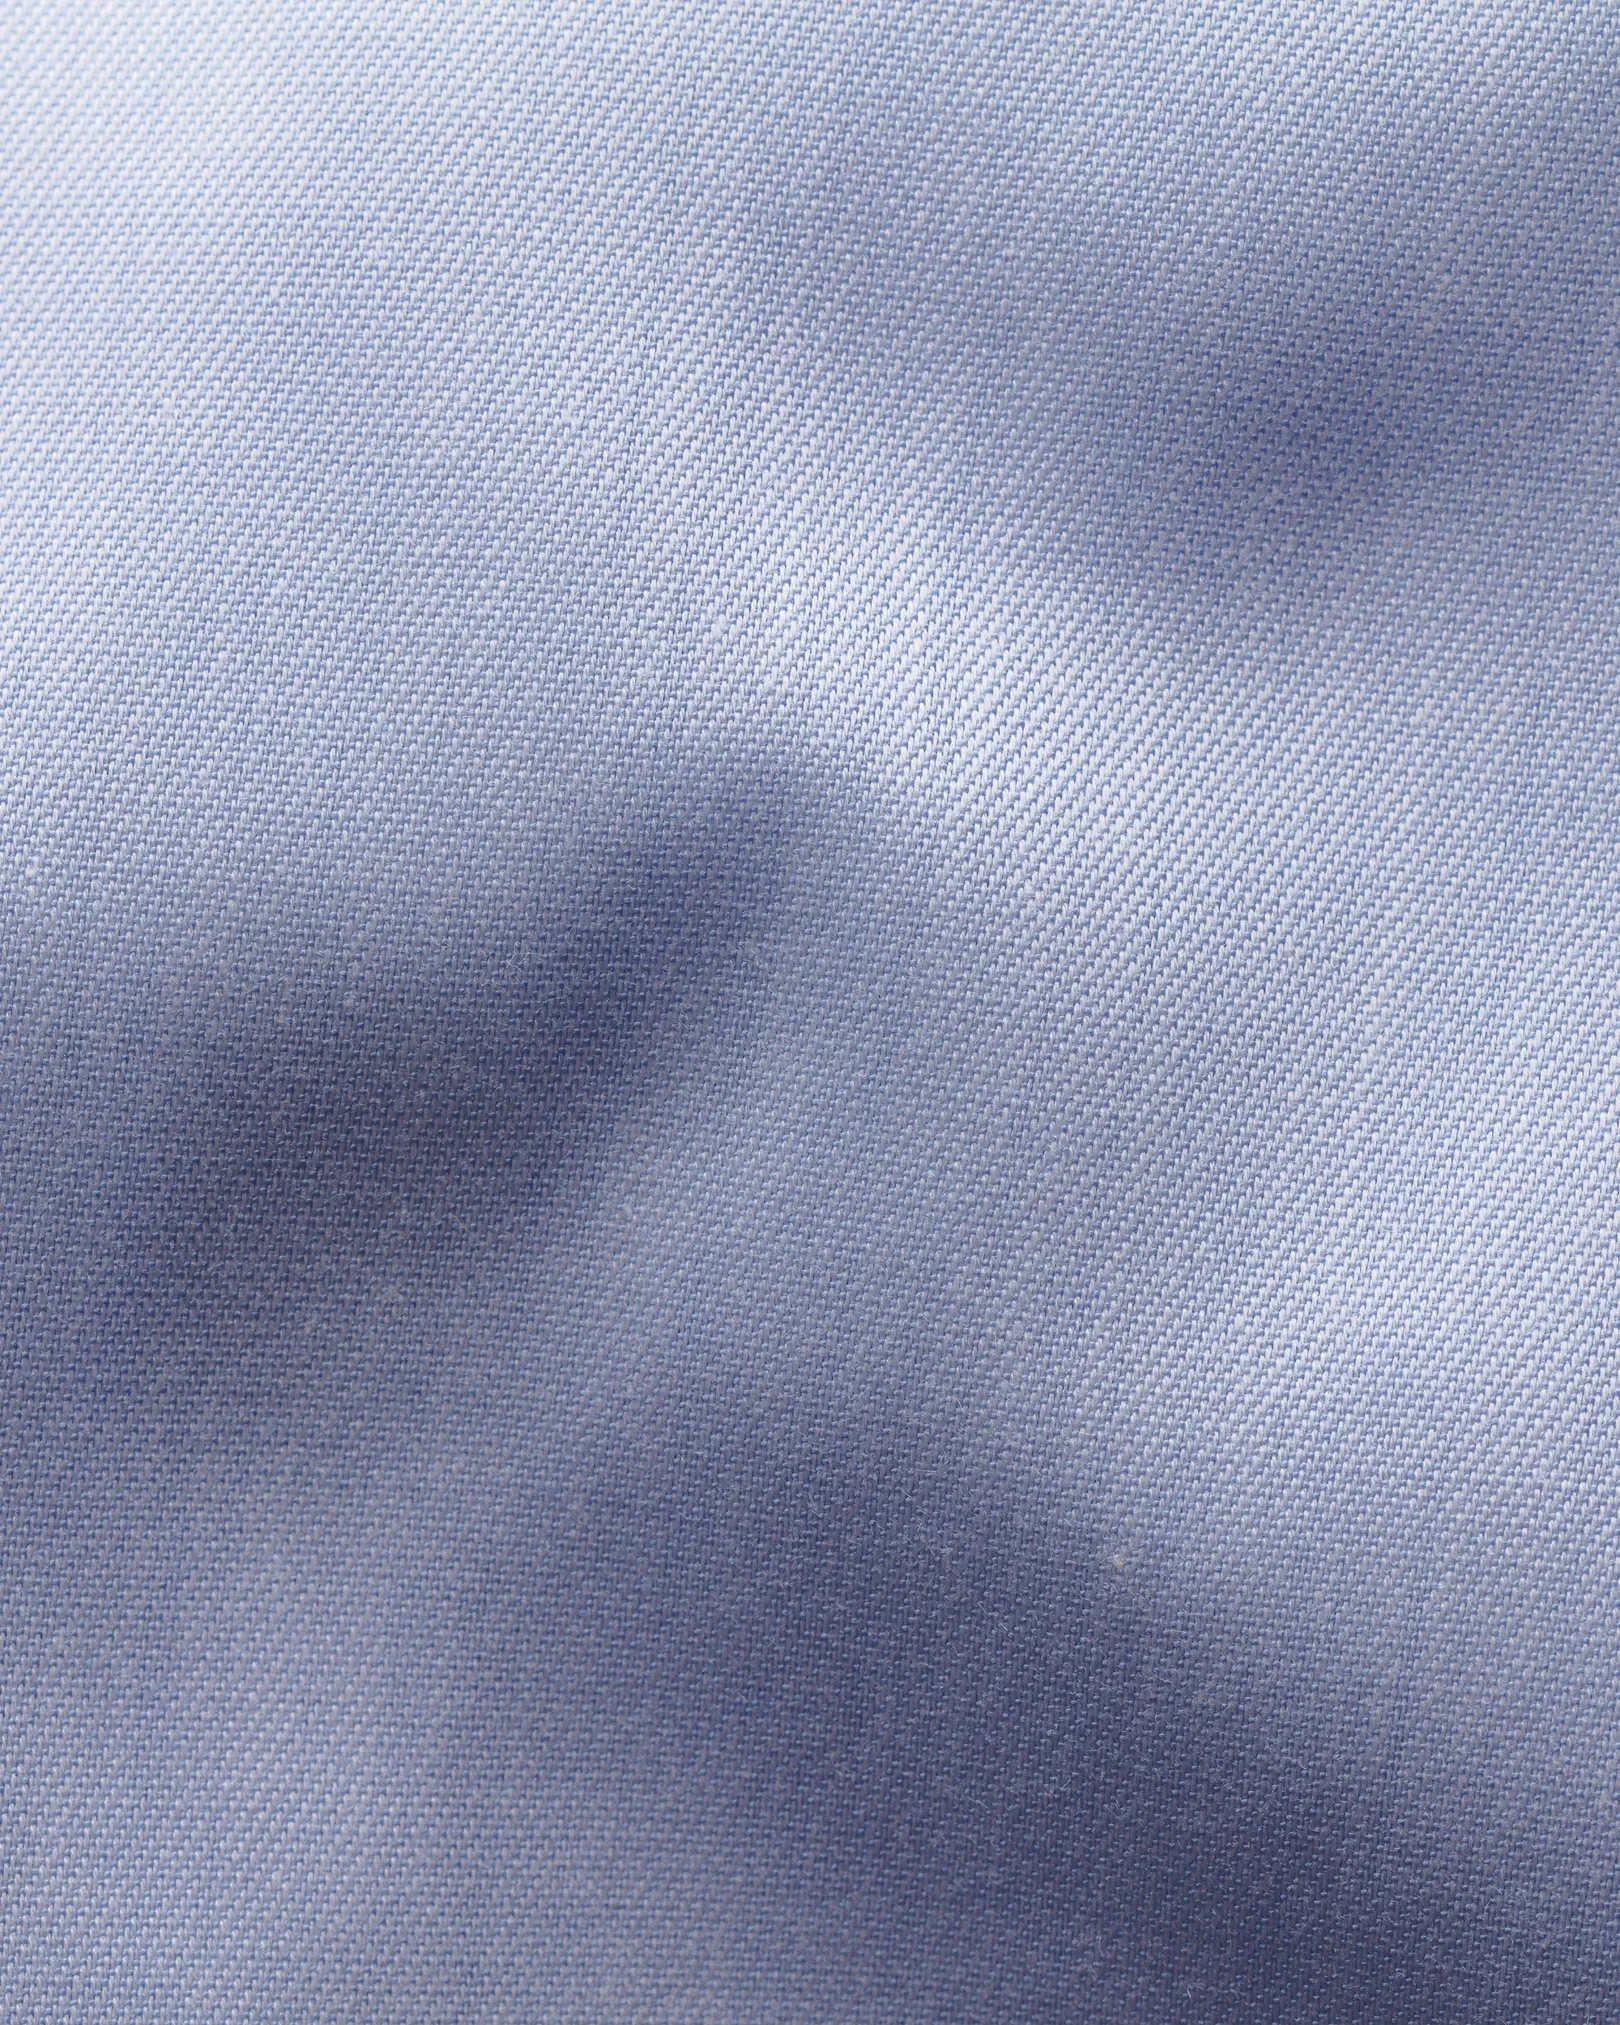 Eton - light blue twill shirt printed details extreme cut away